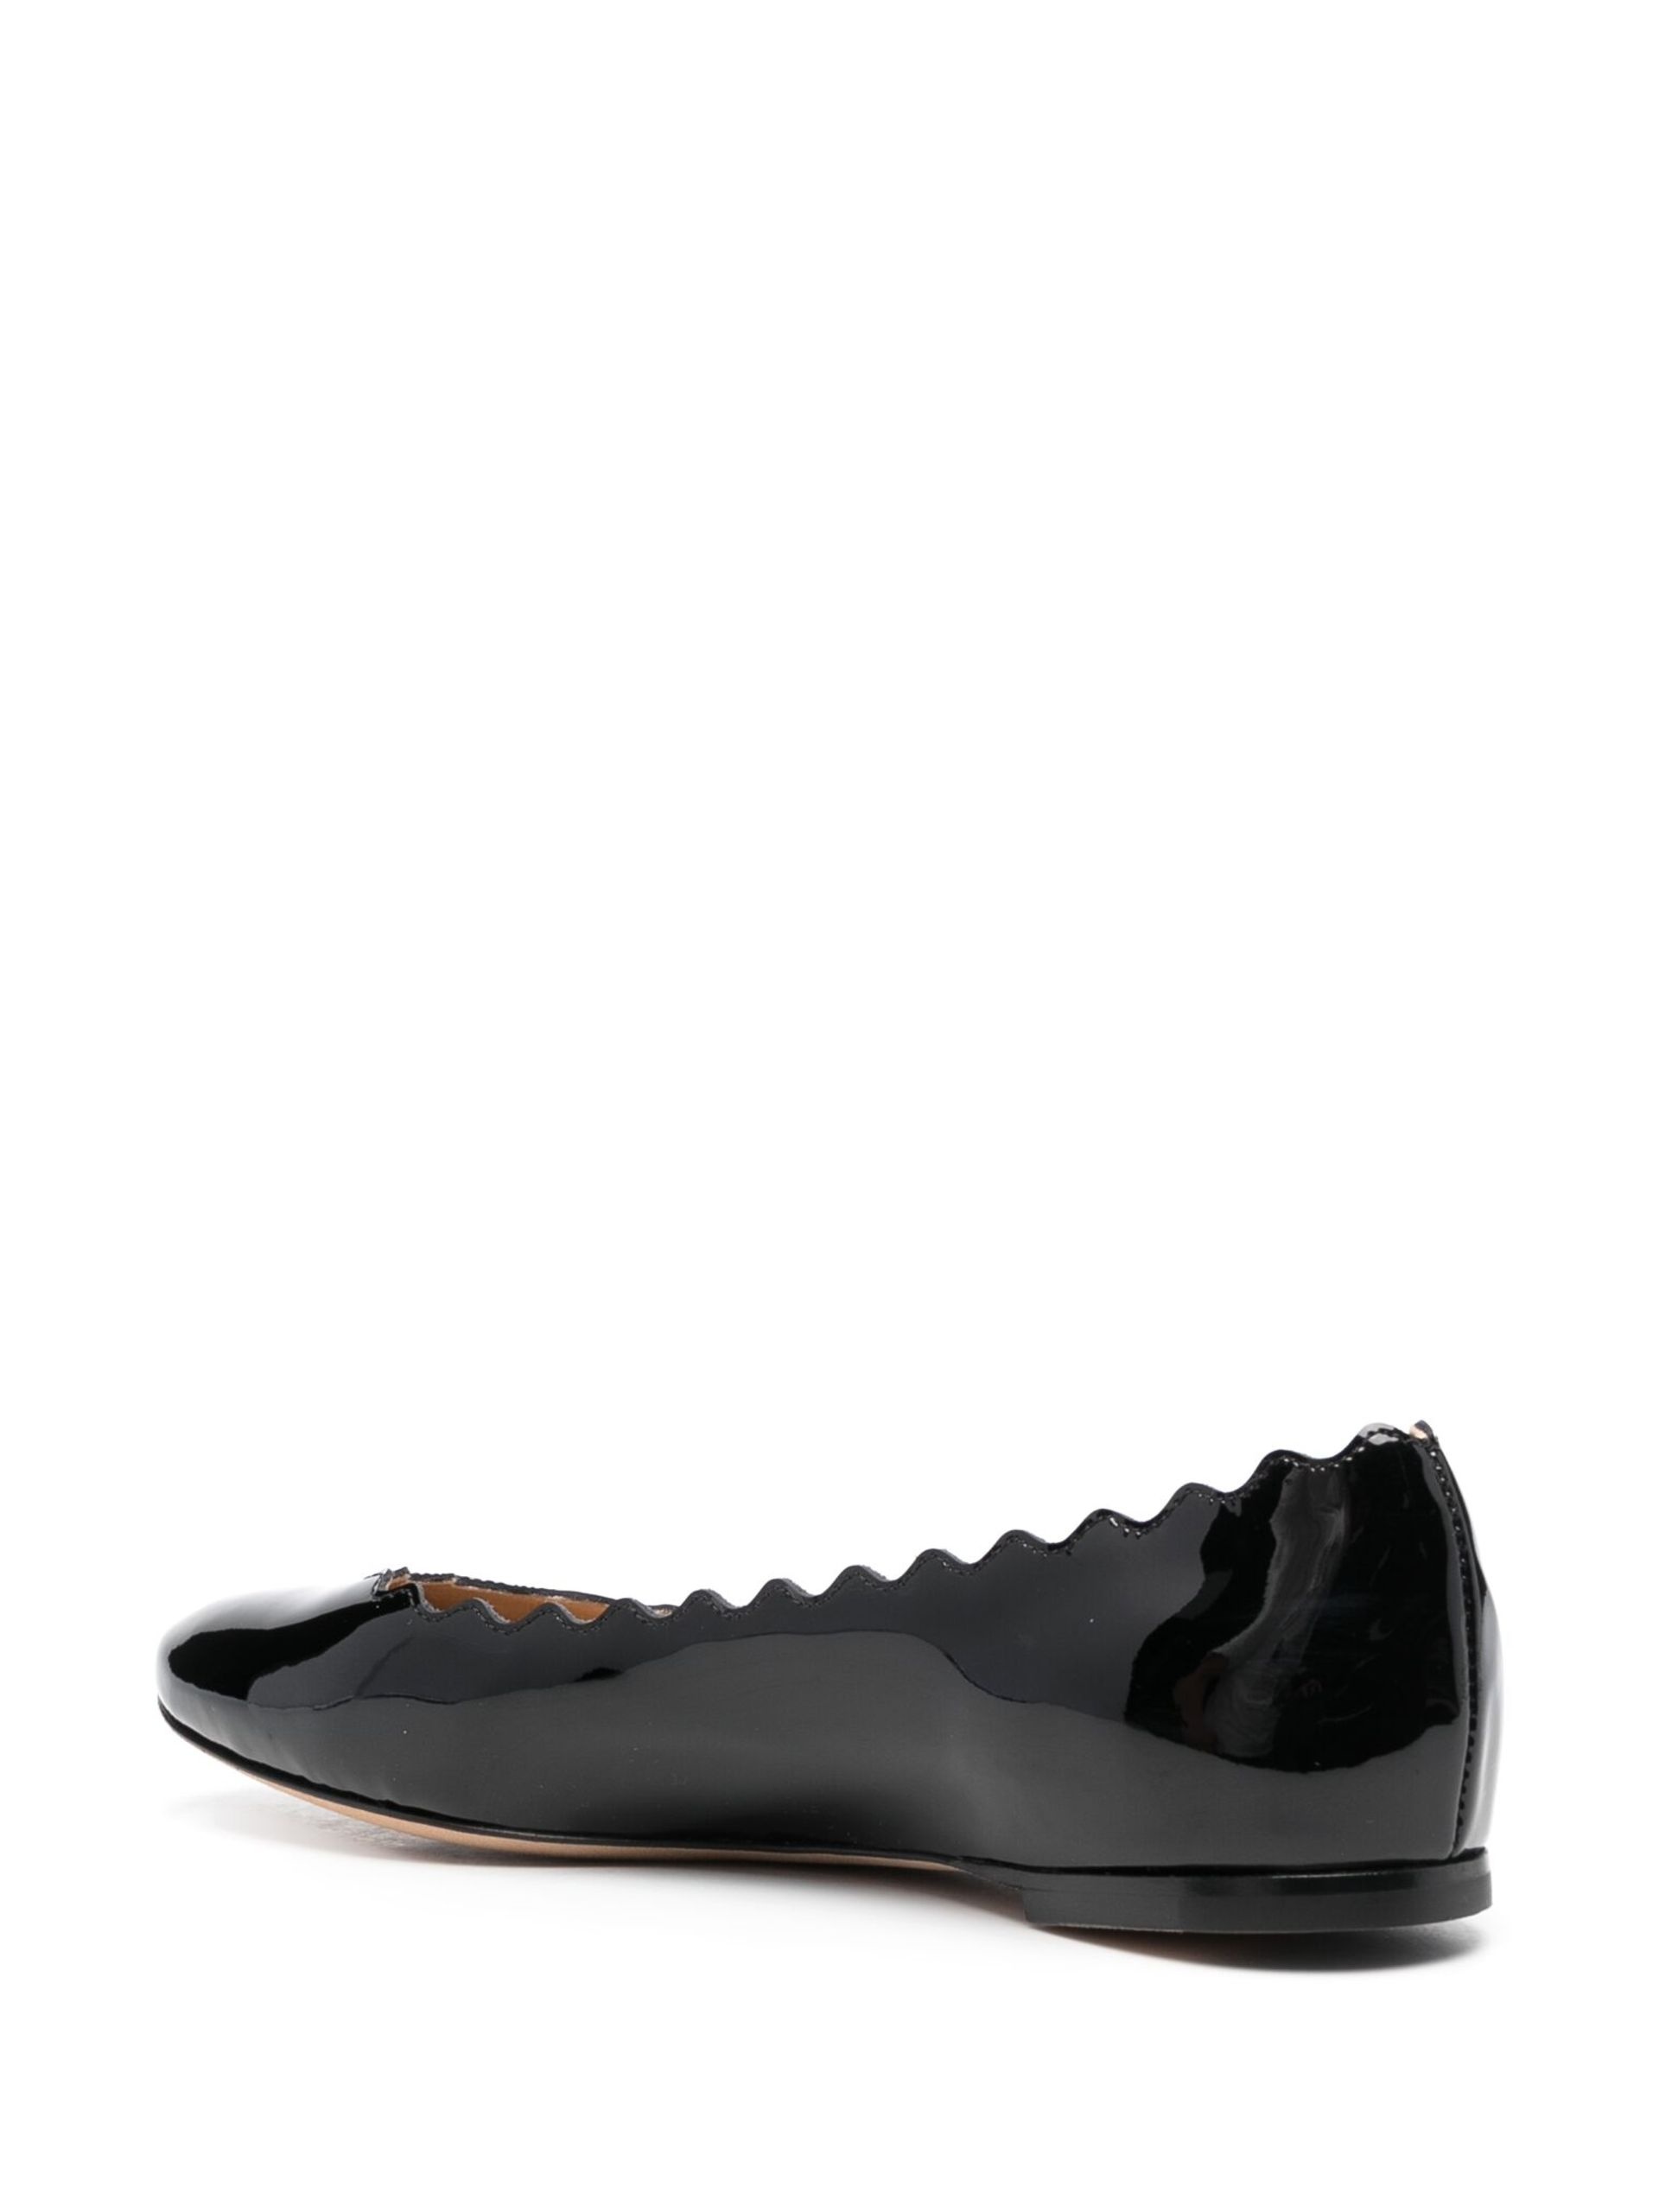 Black Patent Leather Ballet Flats - 3